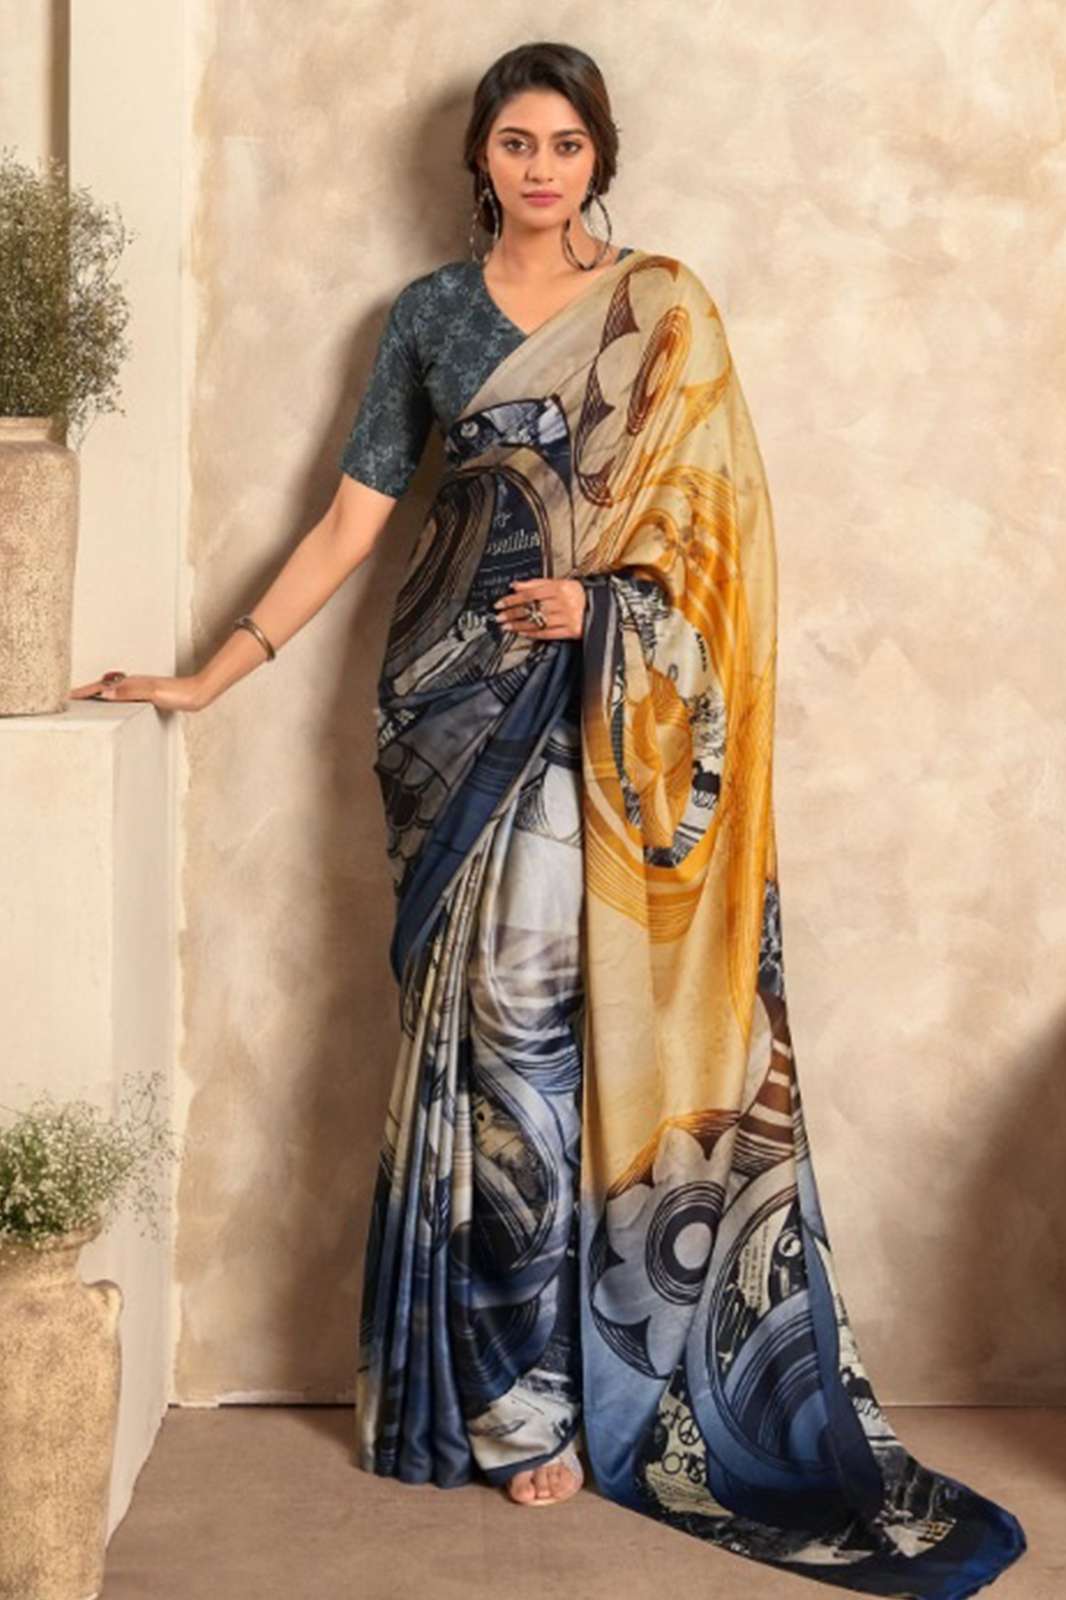 RAJPATH Jasmine Silk Satin Crepe Saree With Beautiful Print in Multicolors 